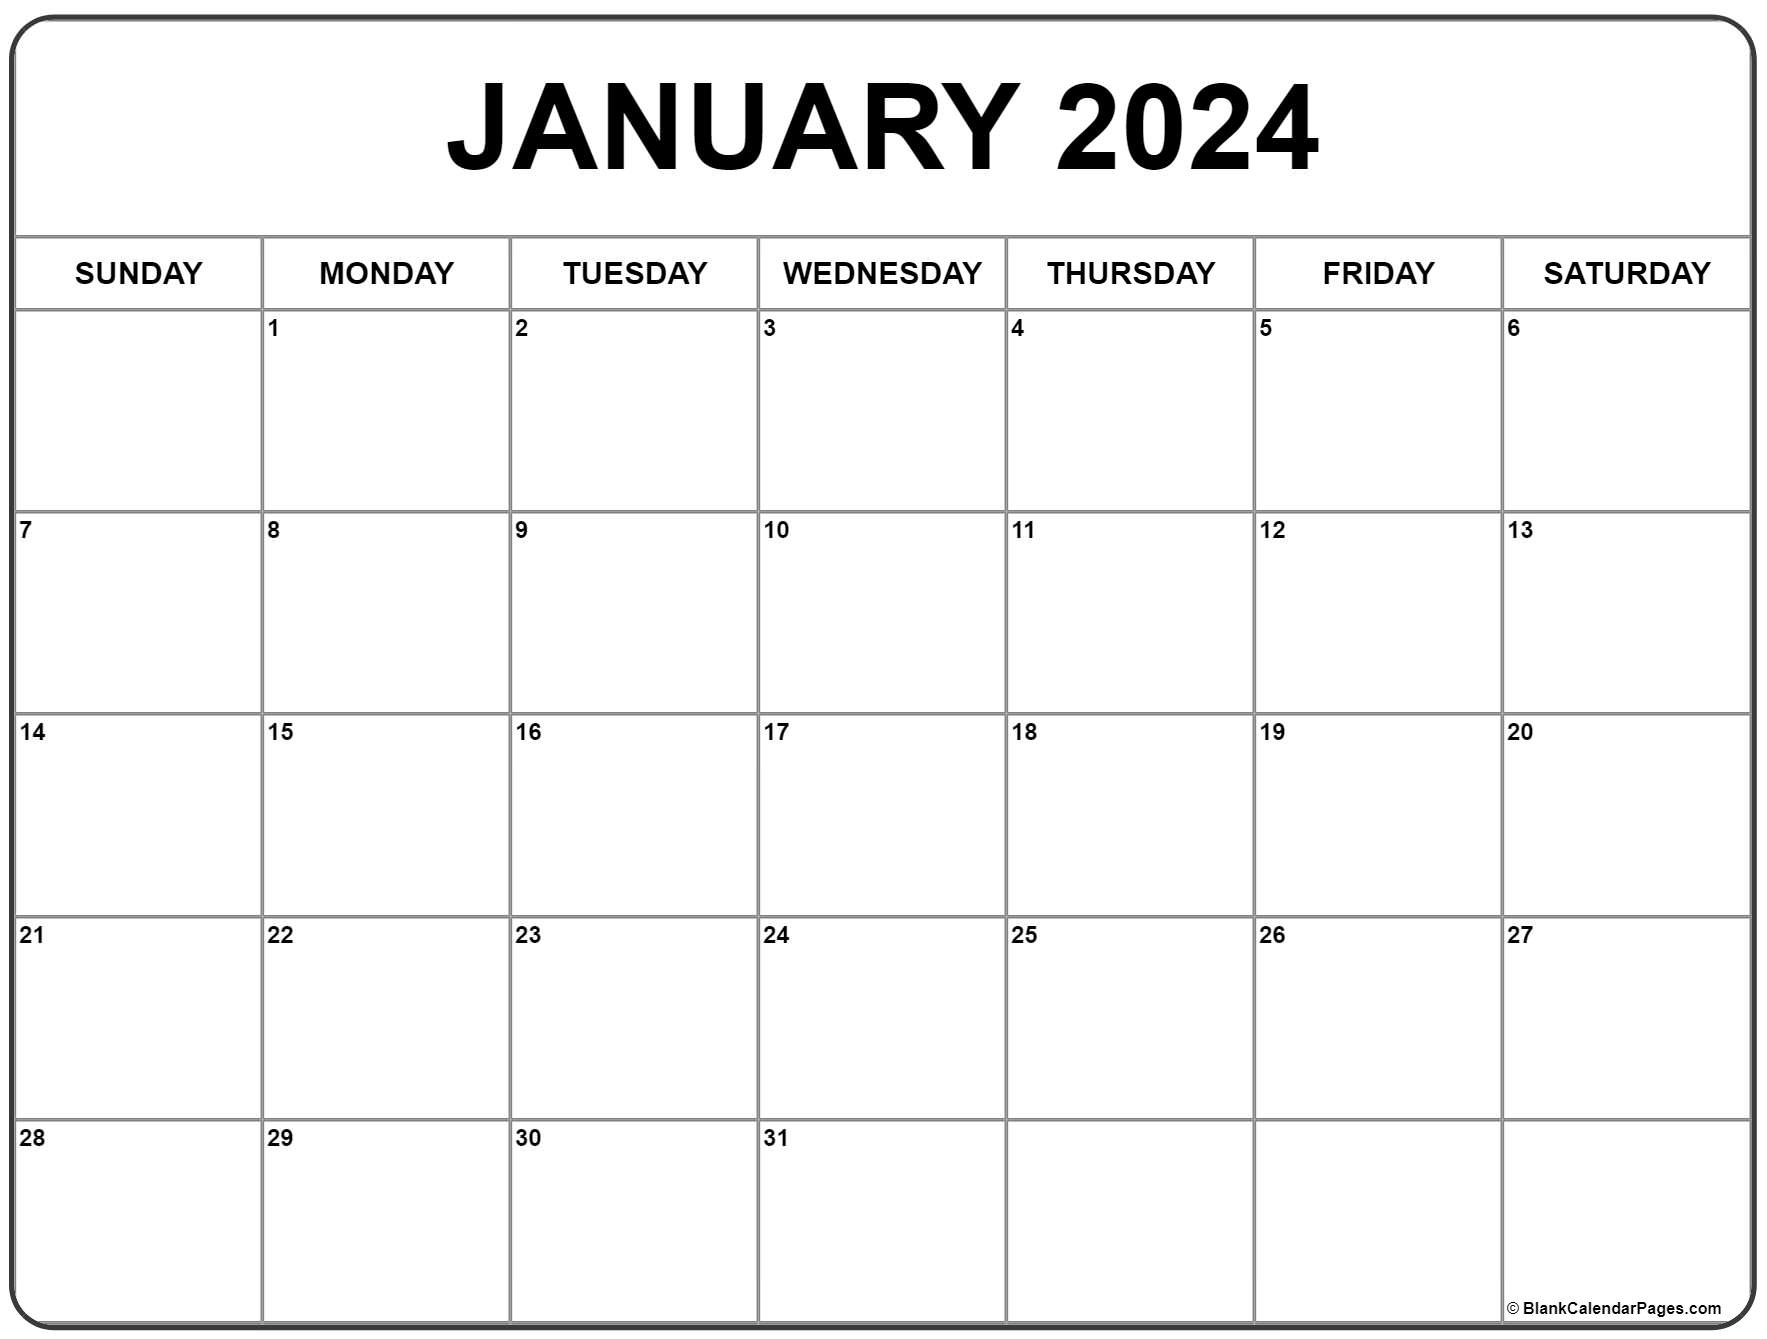 January 2024 Calendar | Free Printable Calendar for Calendar Printable 2024 January